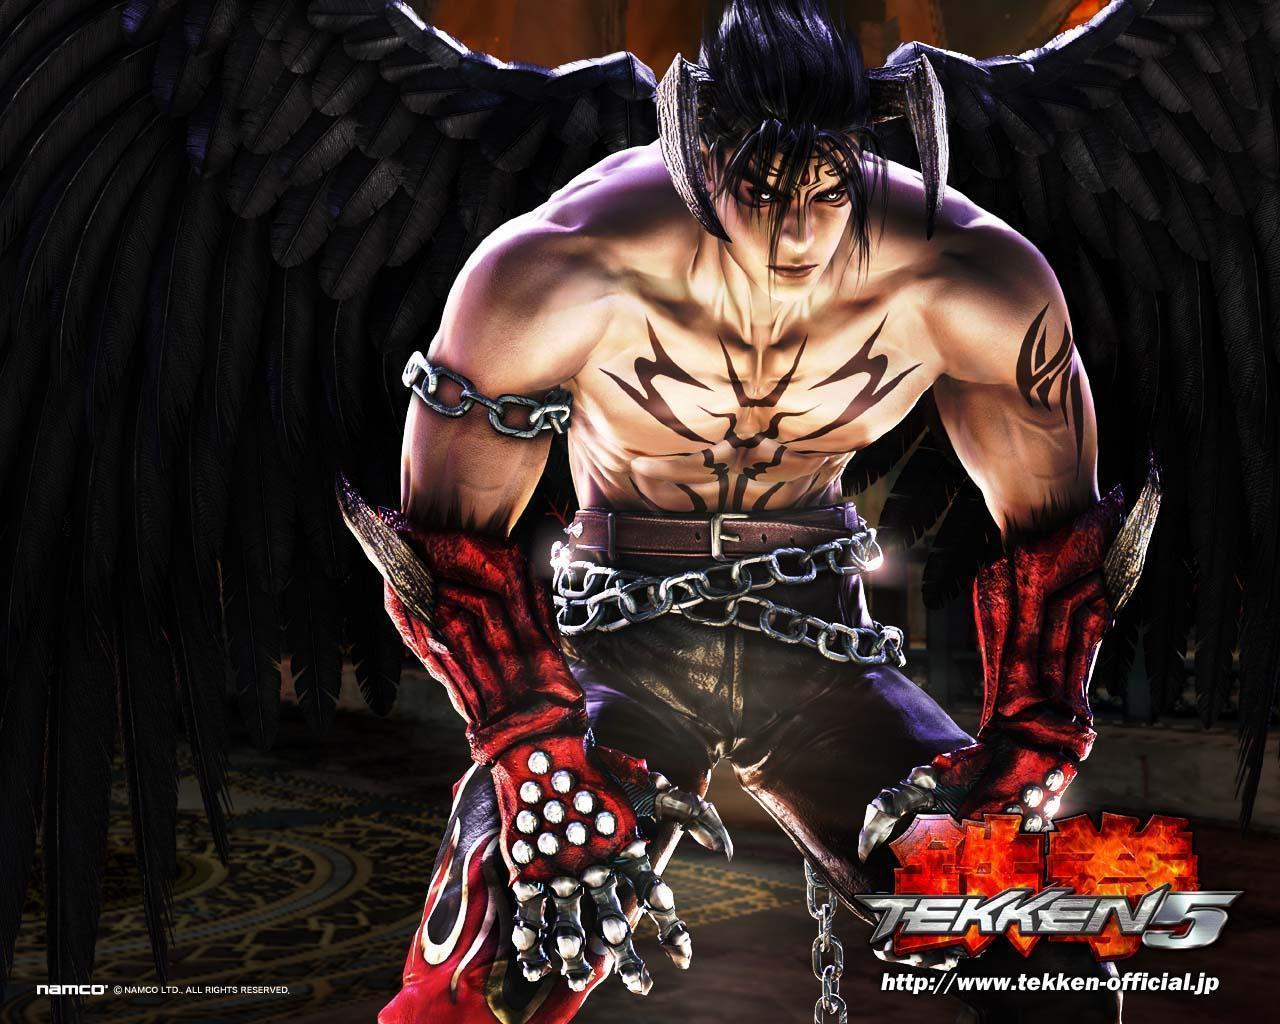 HD Wallpaper of Tekken 5